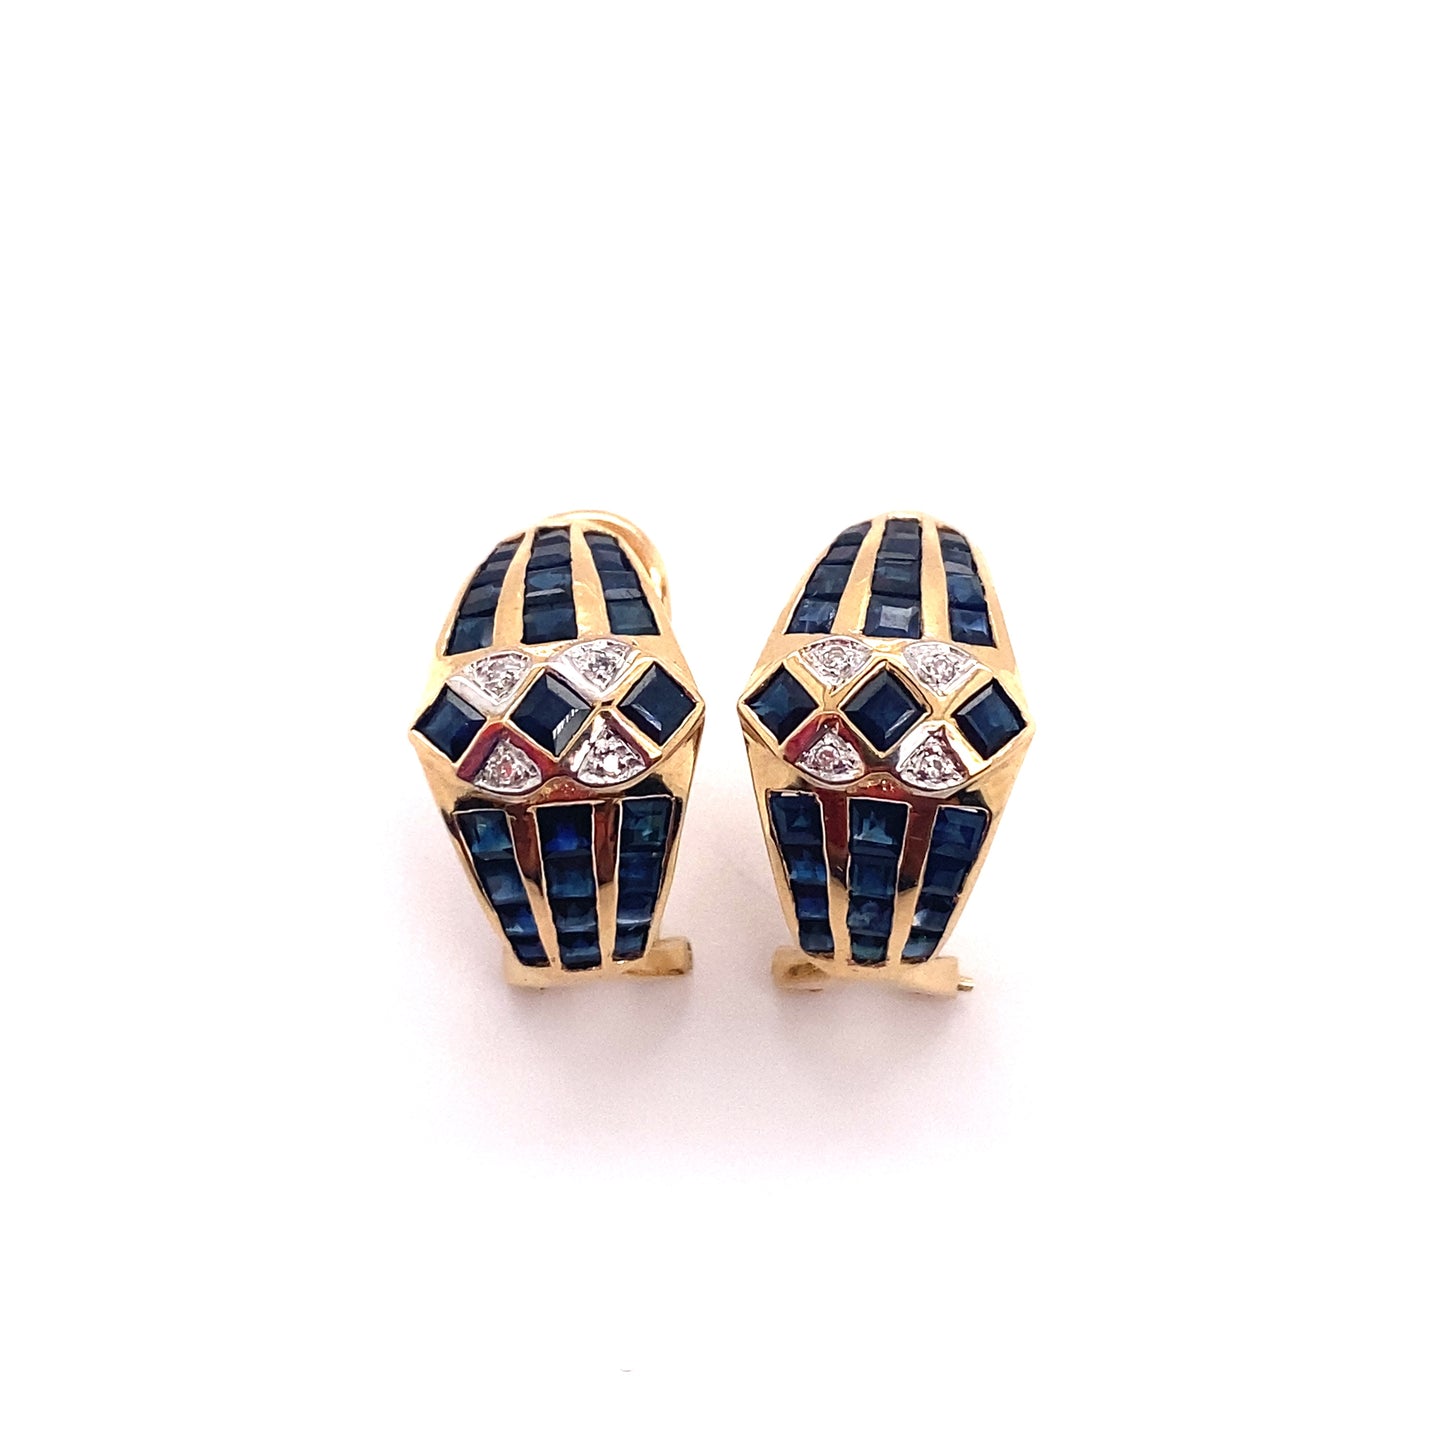 Circa 1950s Diamond and Sapphire Half Hoop Earrings in 14K Gold